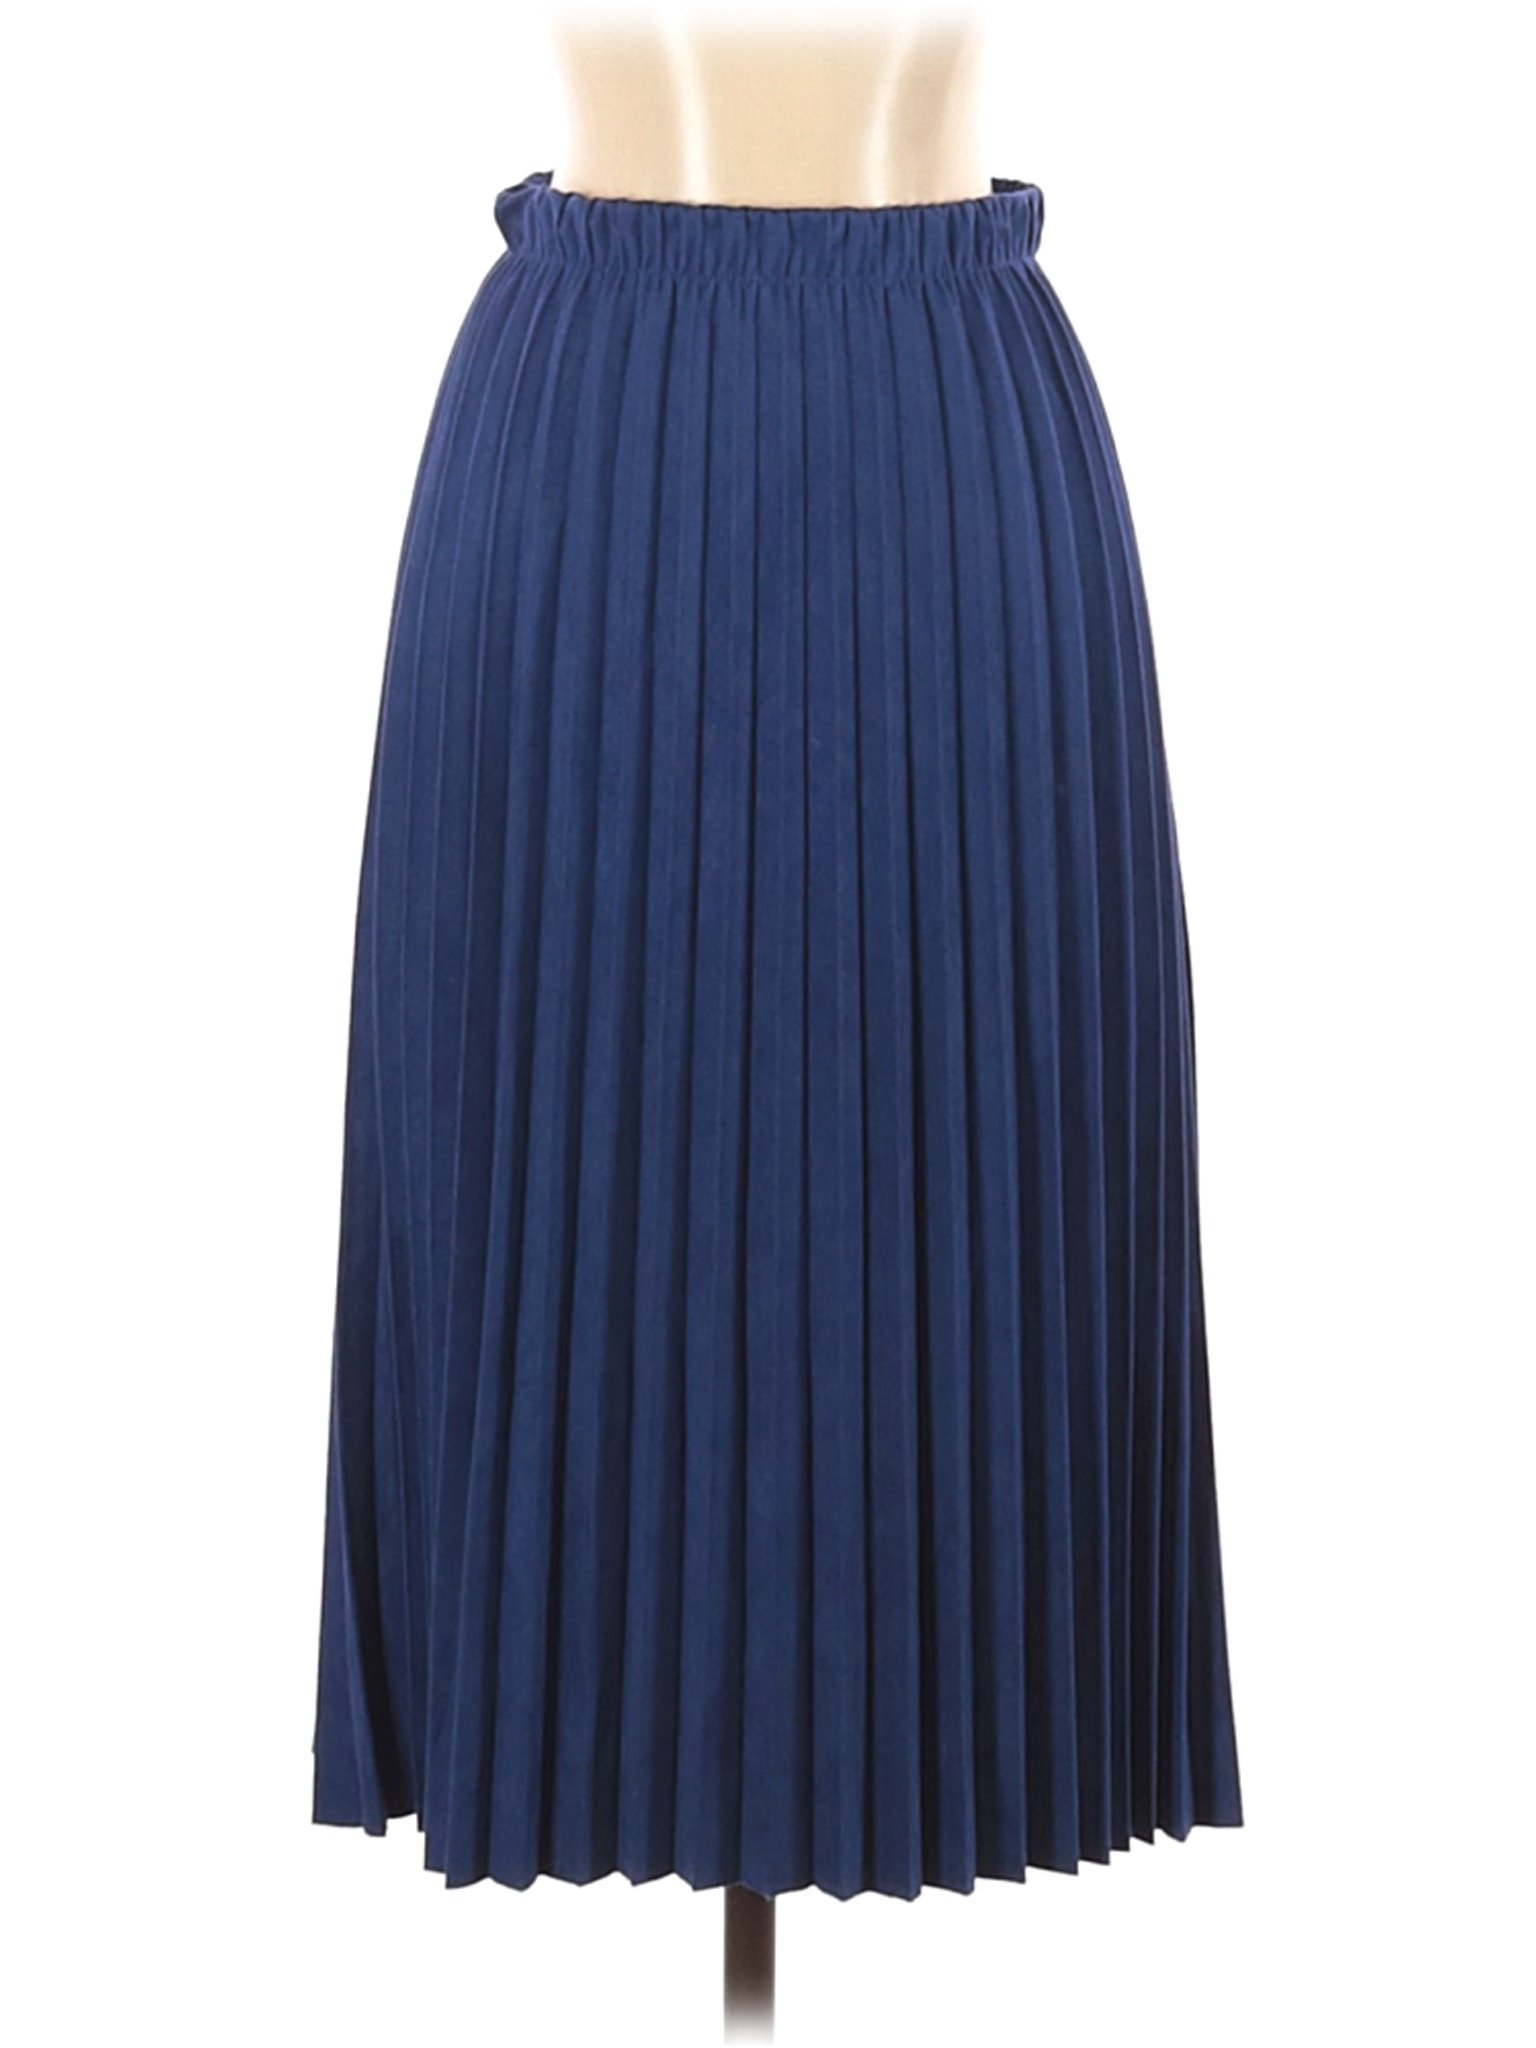 Zara Women Blue Casual Skirt S | eBay